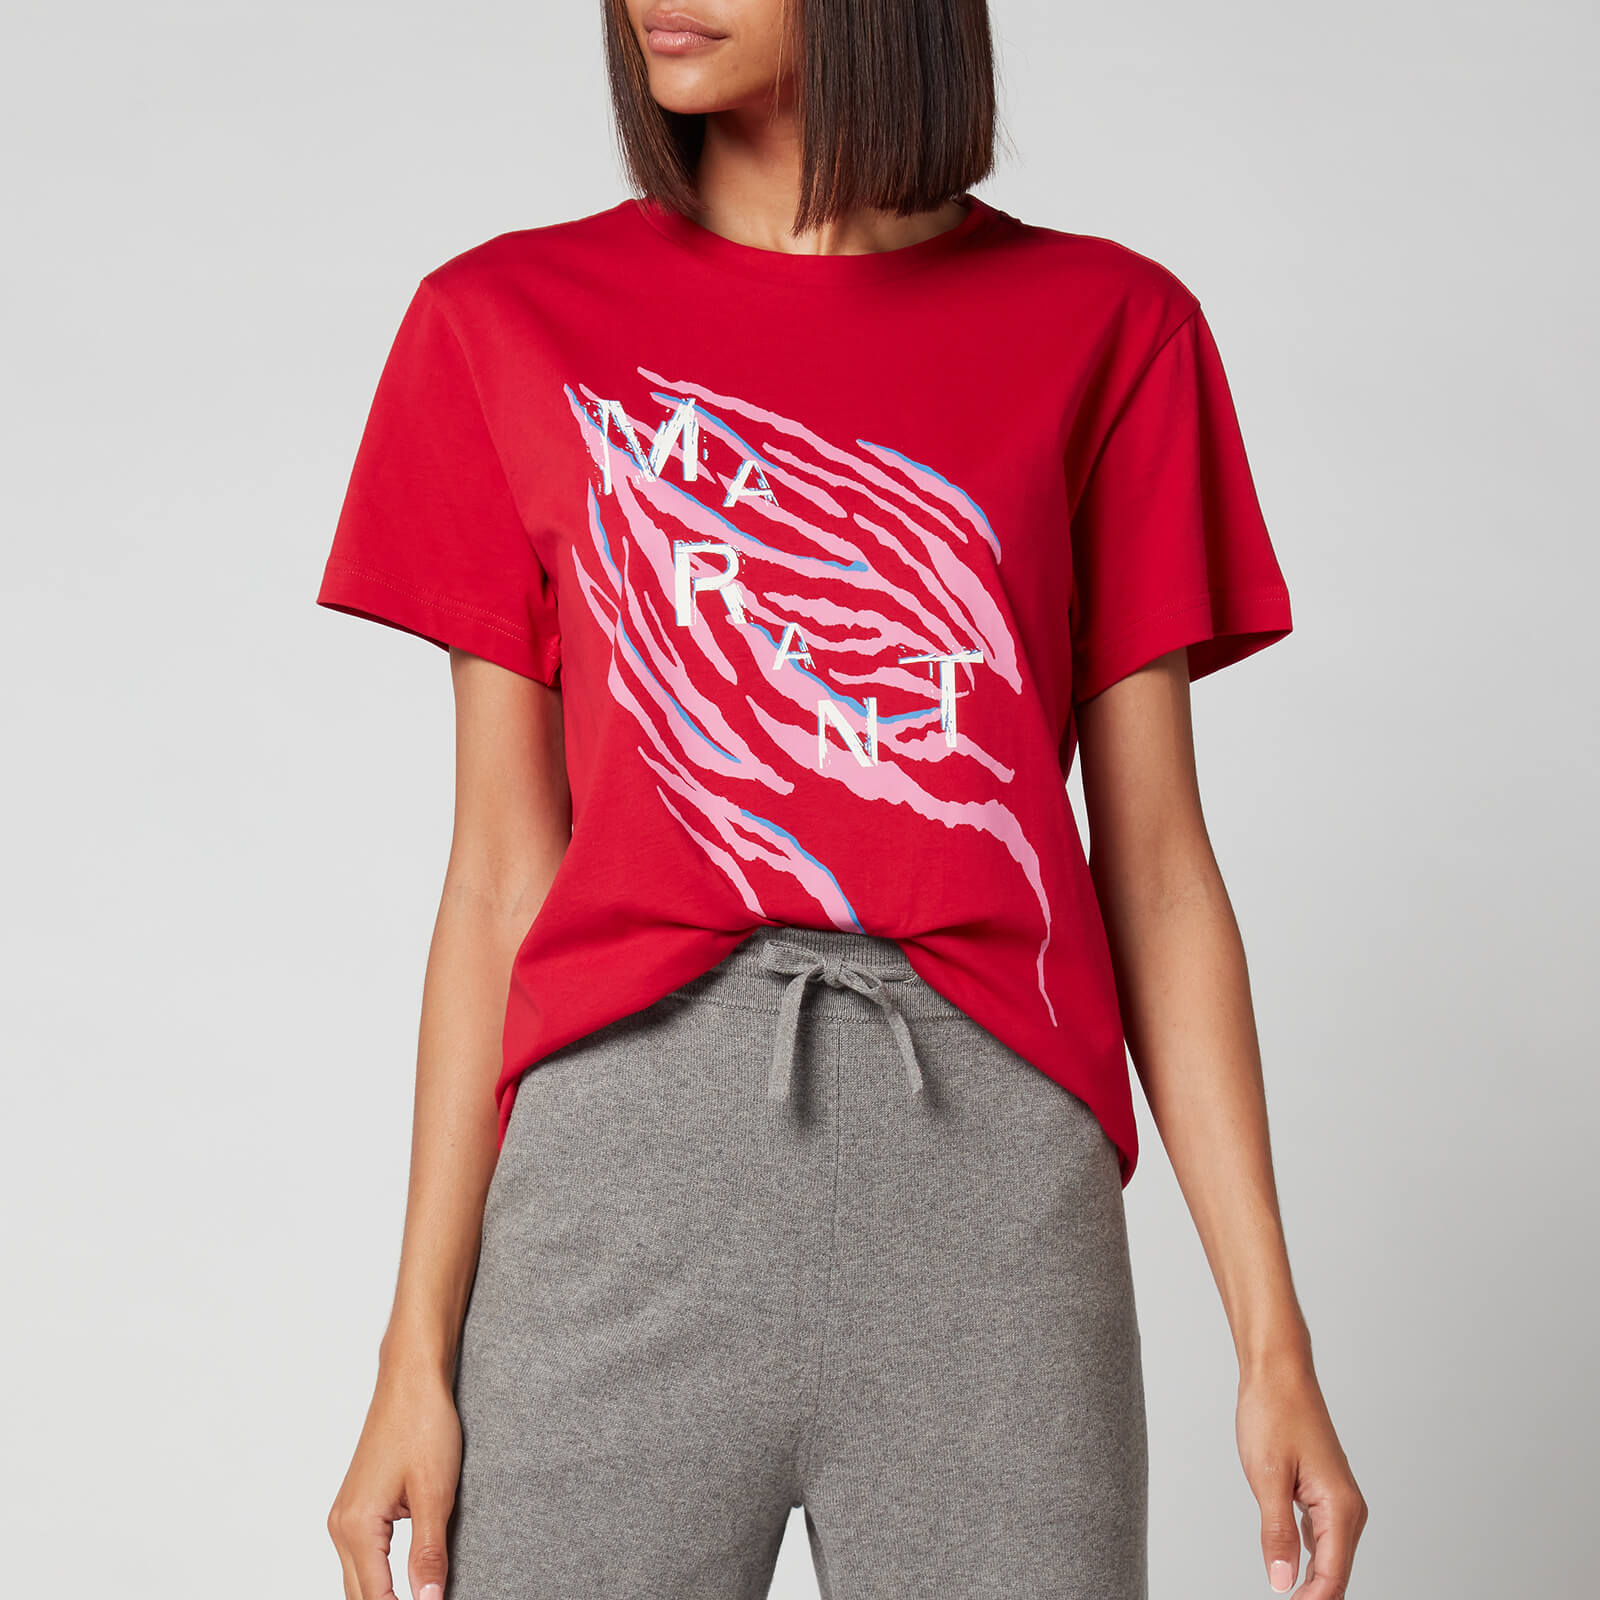 Isabel Marant Women's Zaof T-Shirt - Red - M